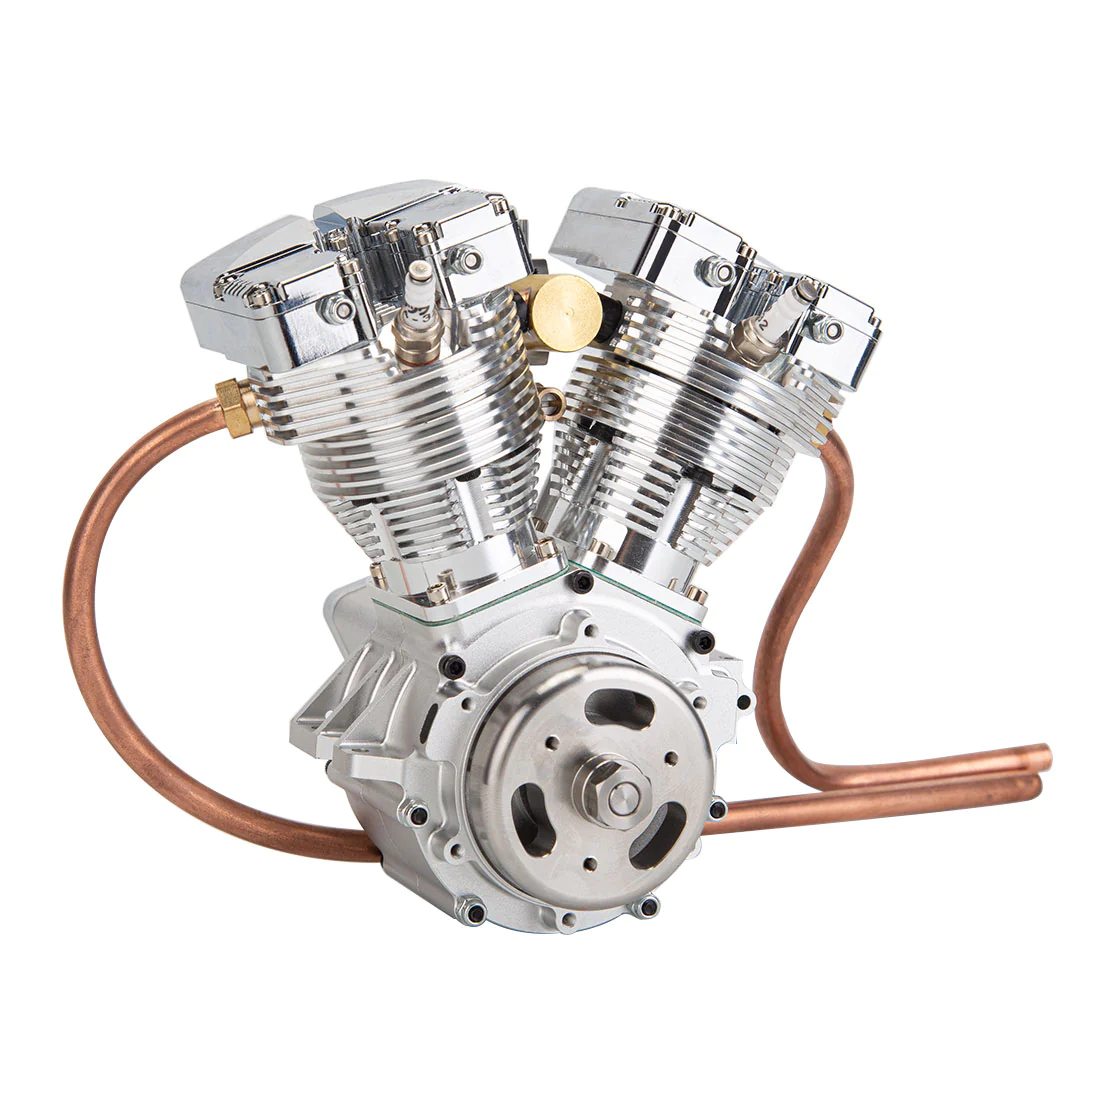 CISON FG-VT157 15.7cc Miniature V-Twin Motorcycle Engine OHV 4 Stroke Air-cooled Gasoline Engine Model 1